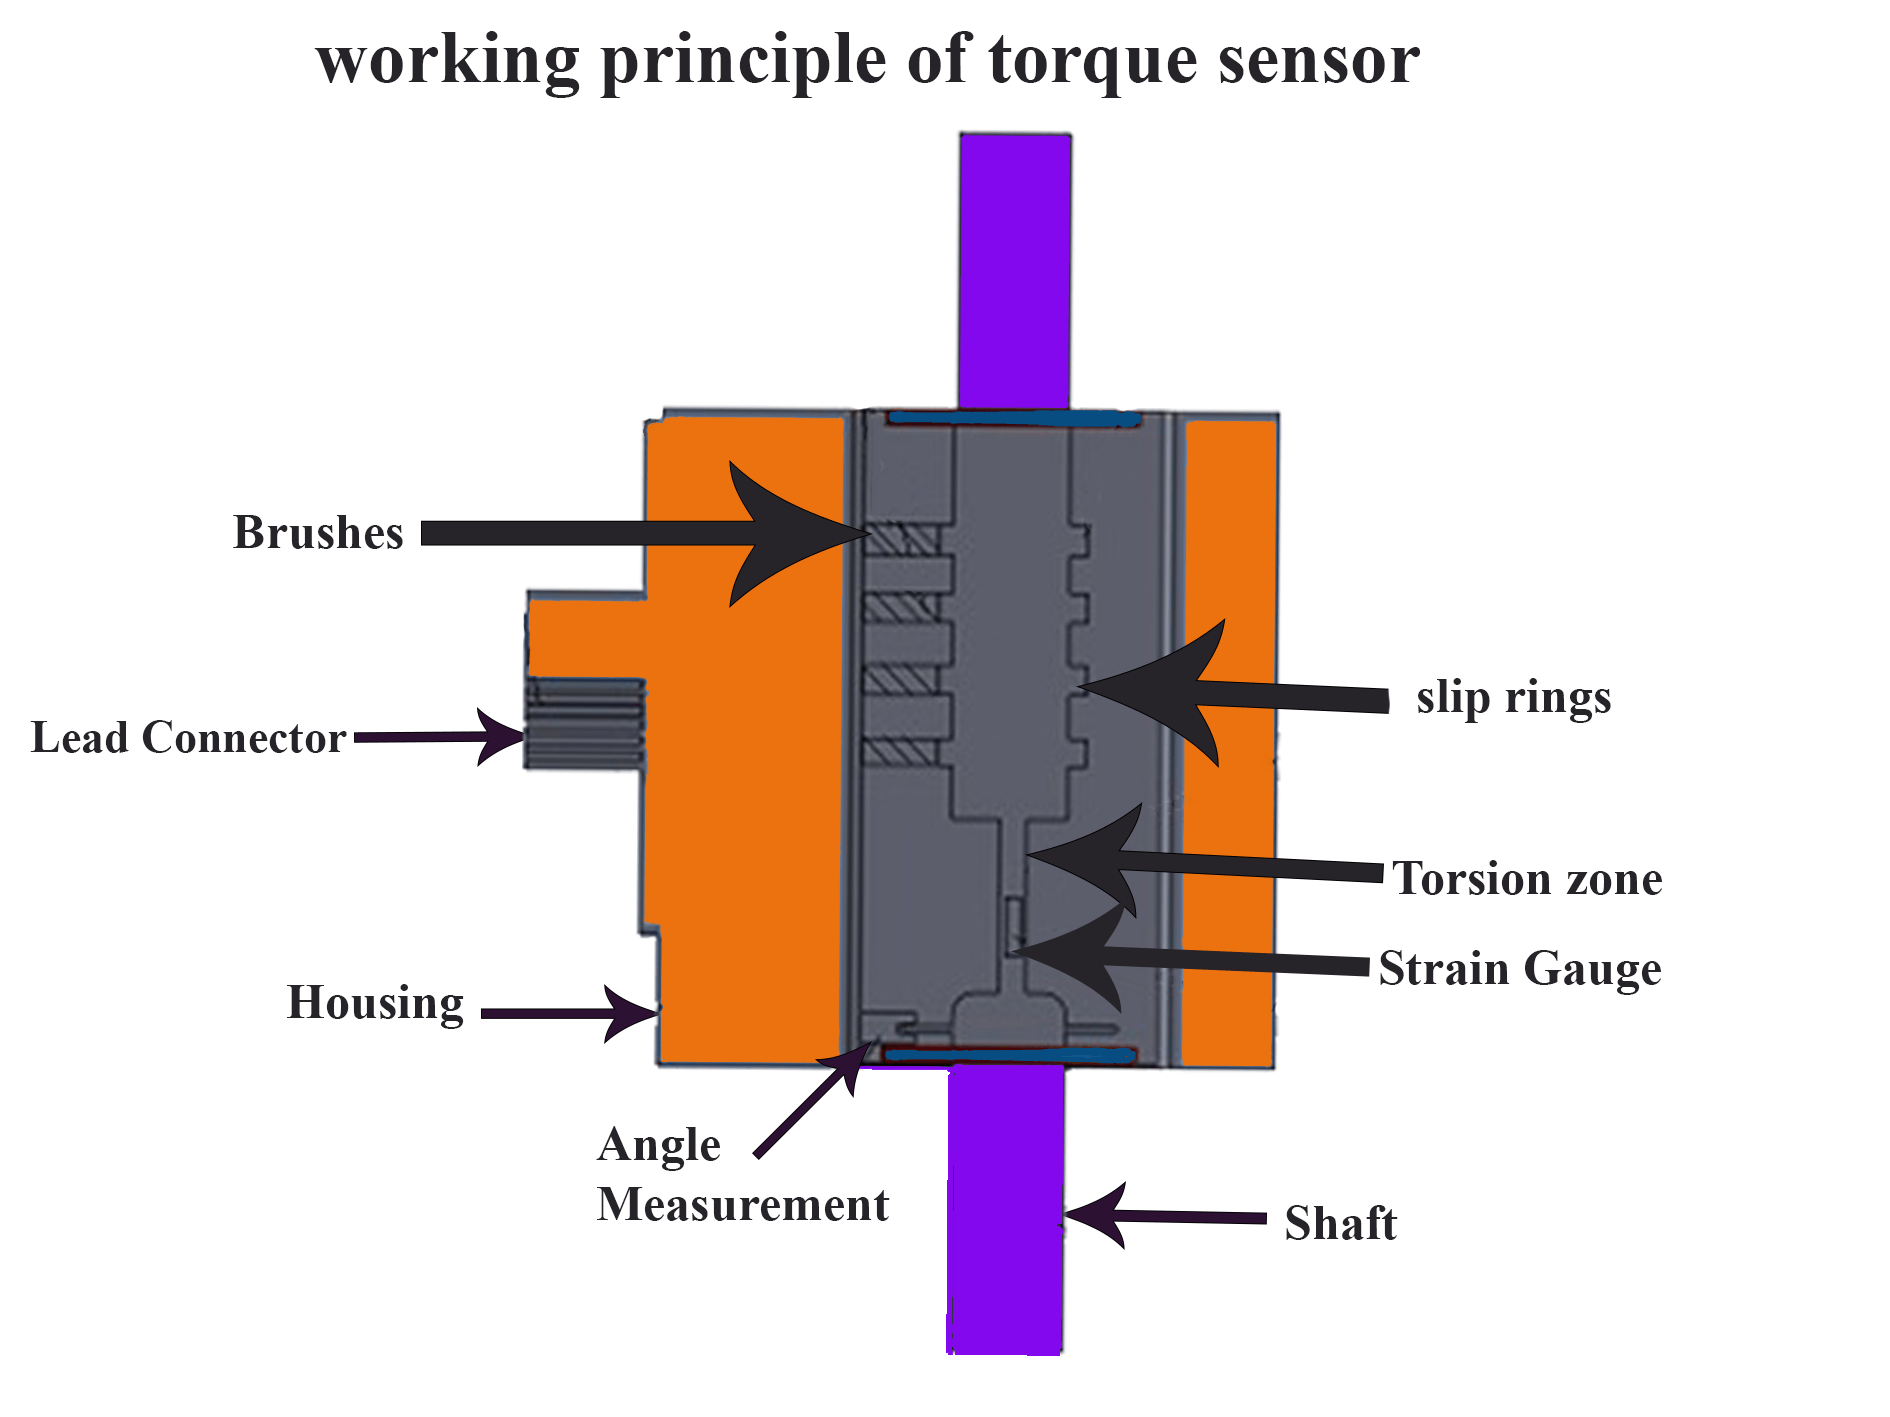 What is the working principle of torque sensor